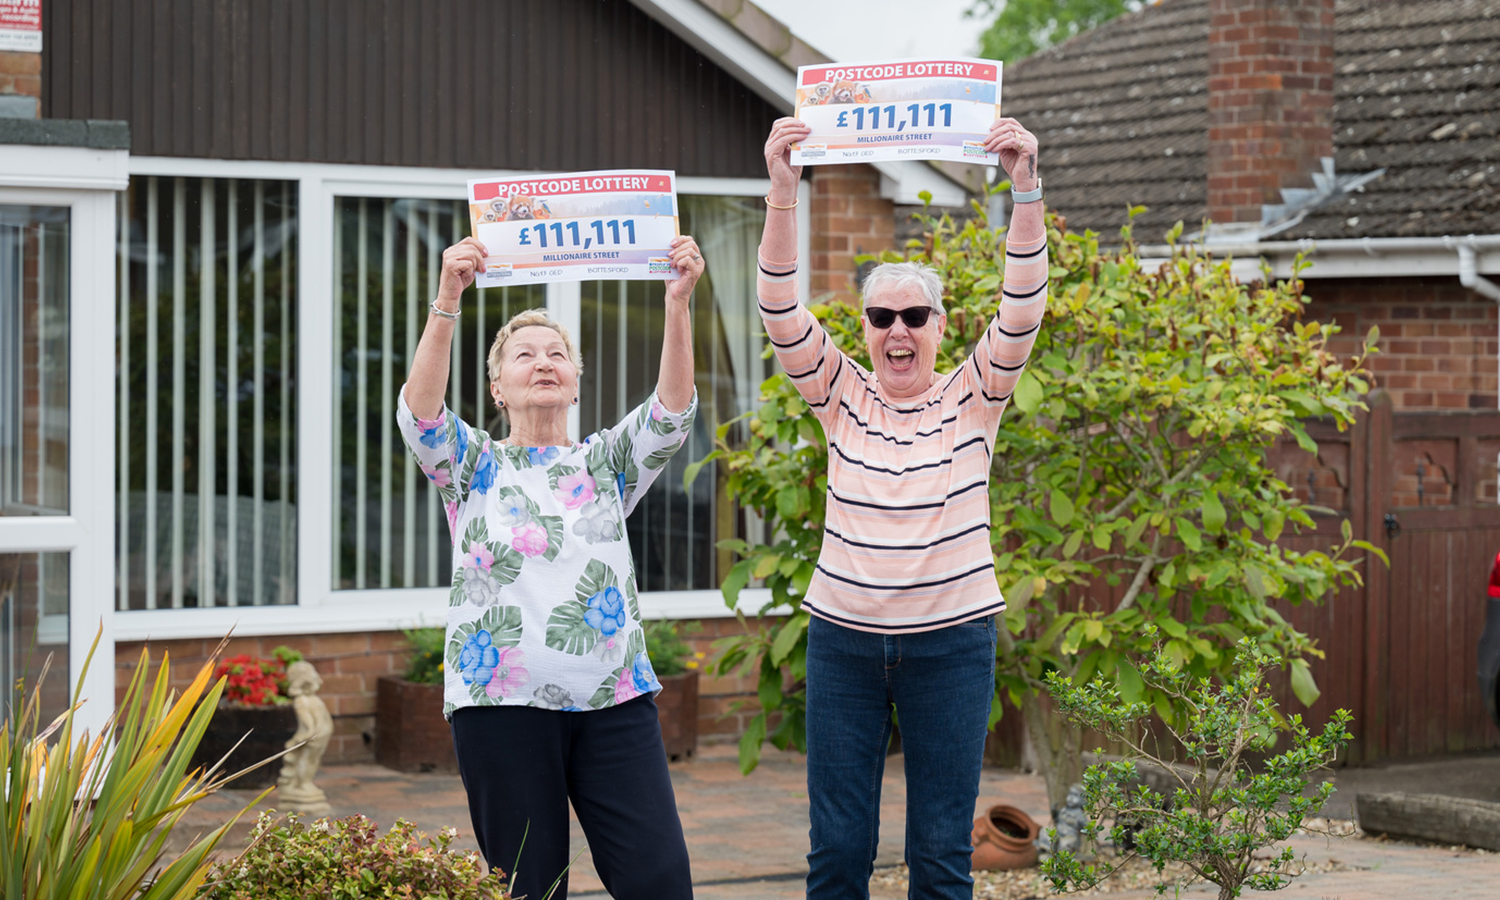 Next door neighbours Olga and Linda hold their winning cheques aloft